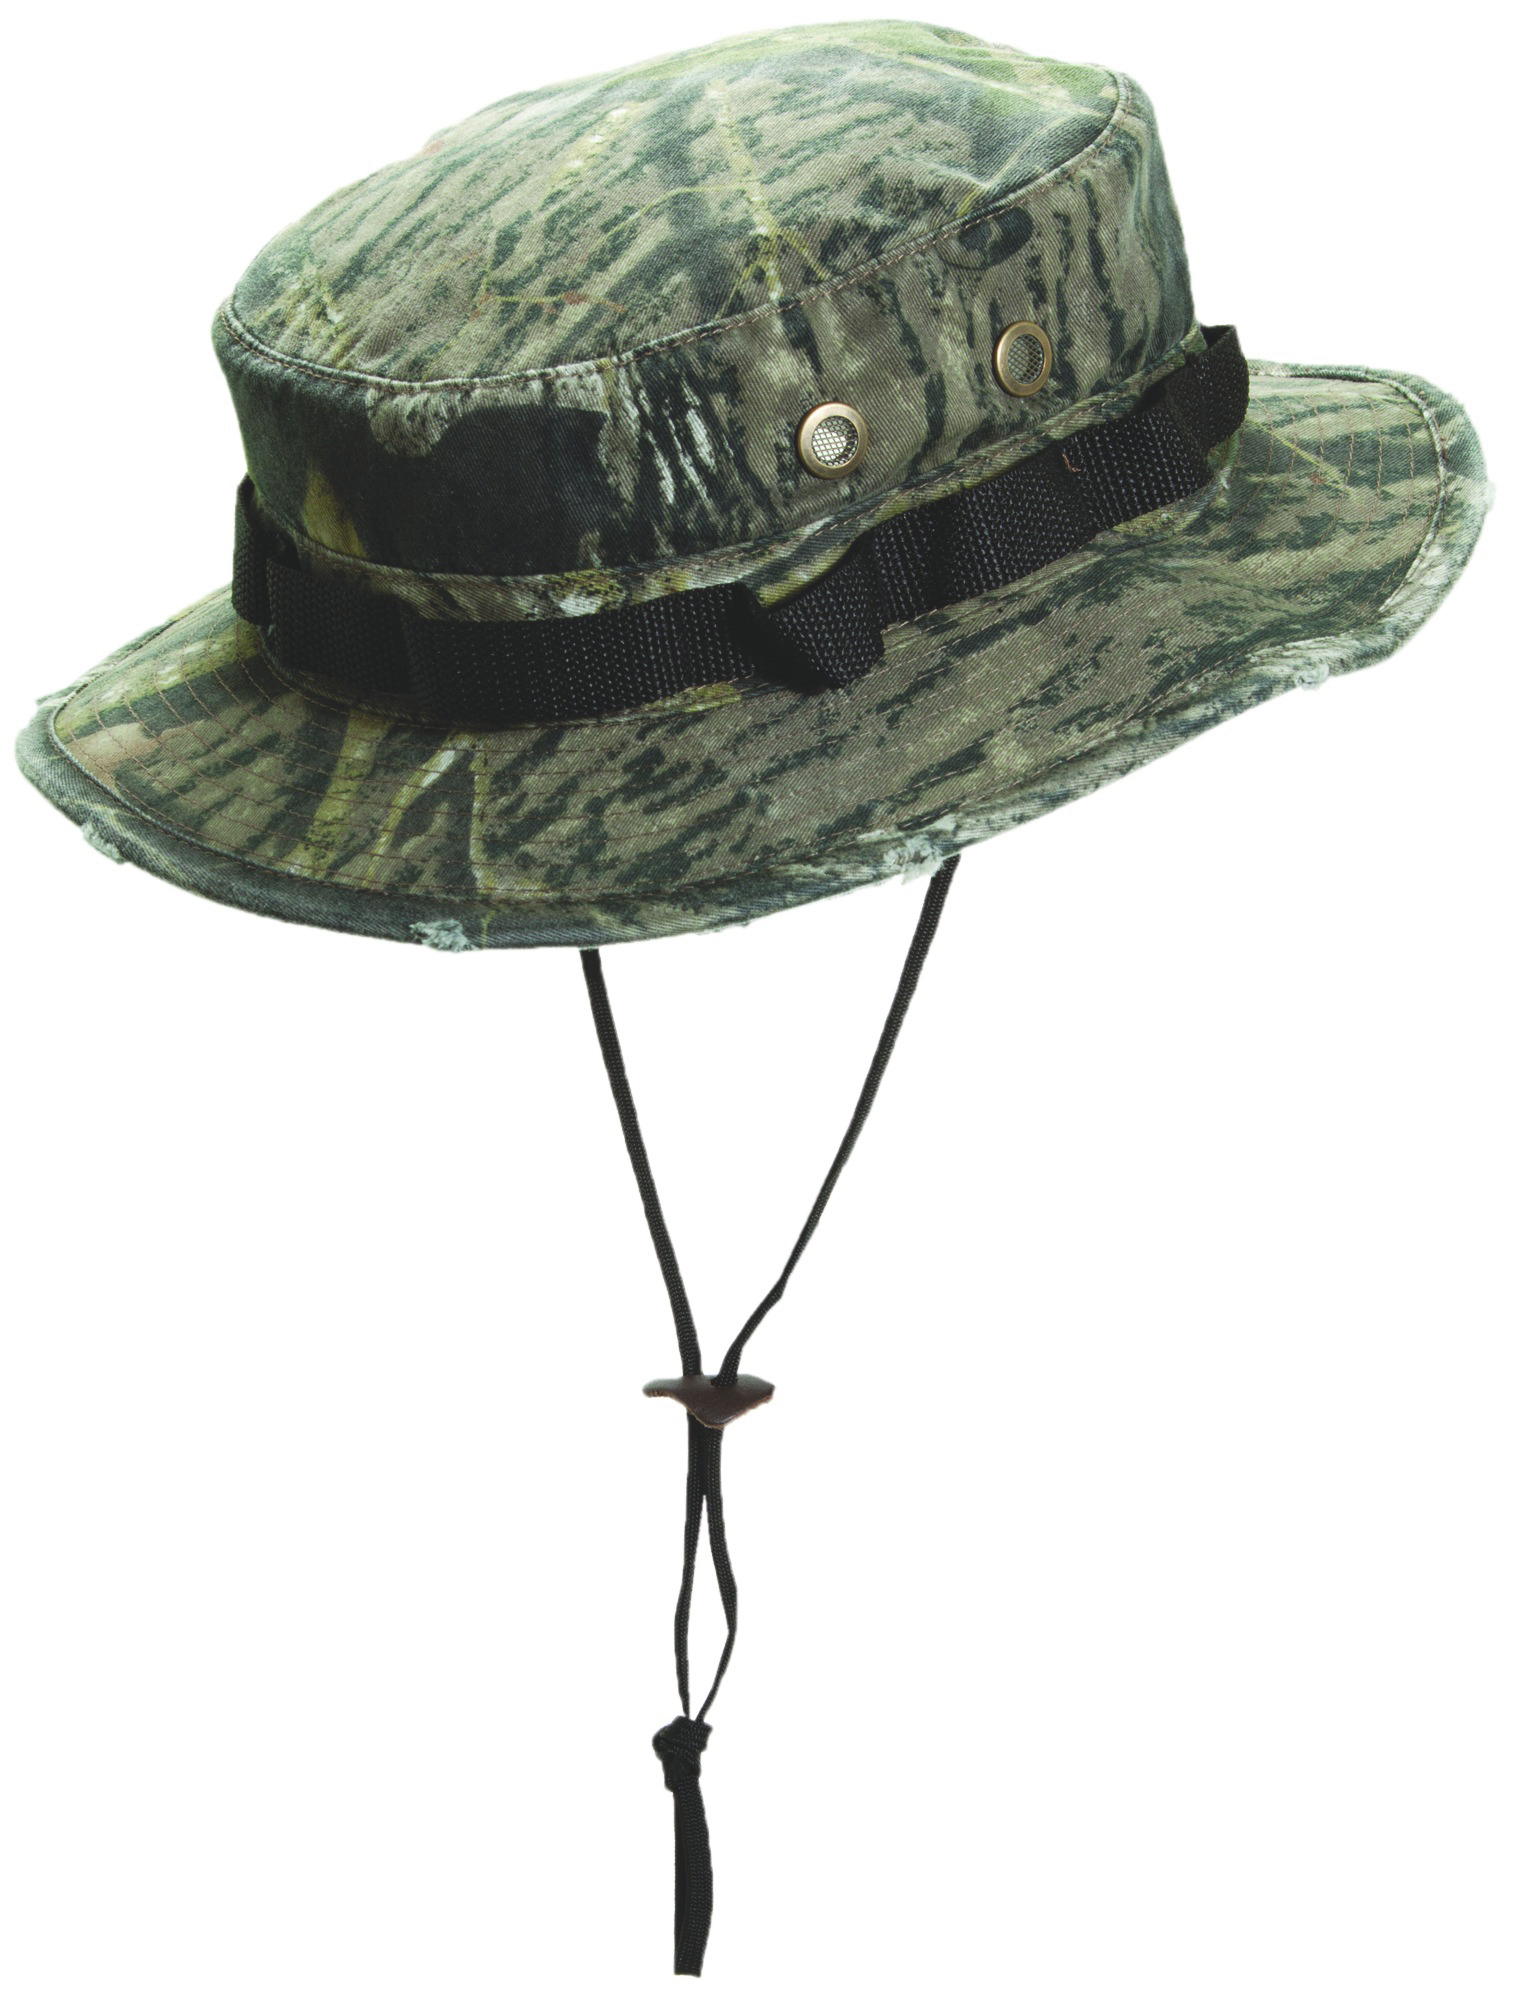 Mossy Oak Boonie Hat with Web Trim